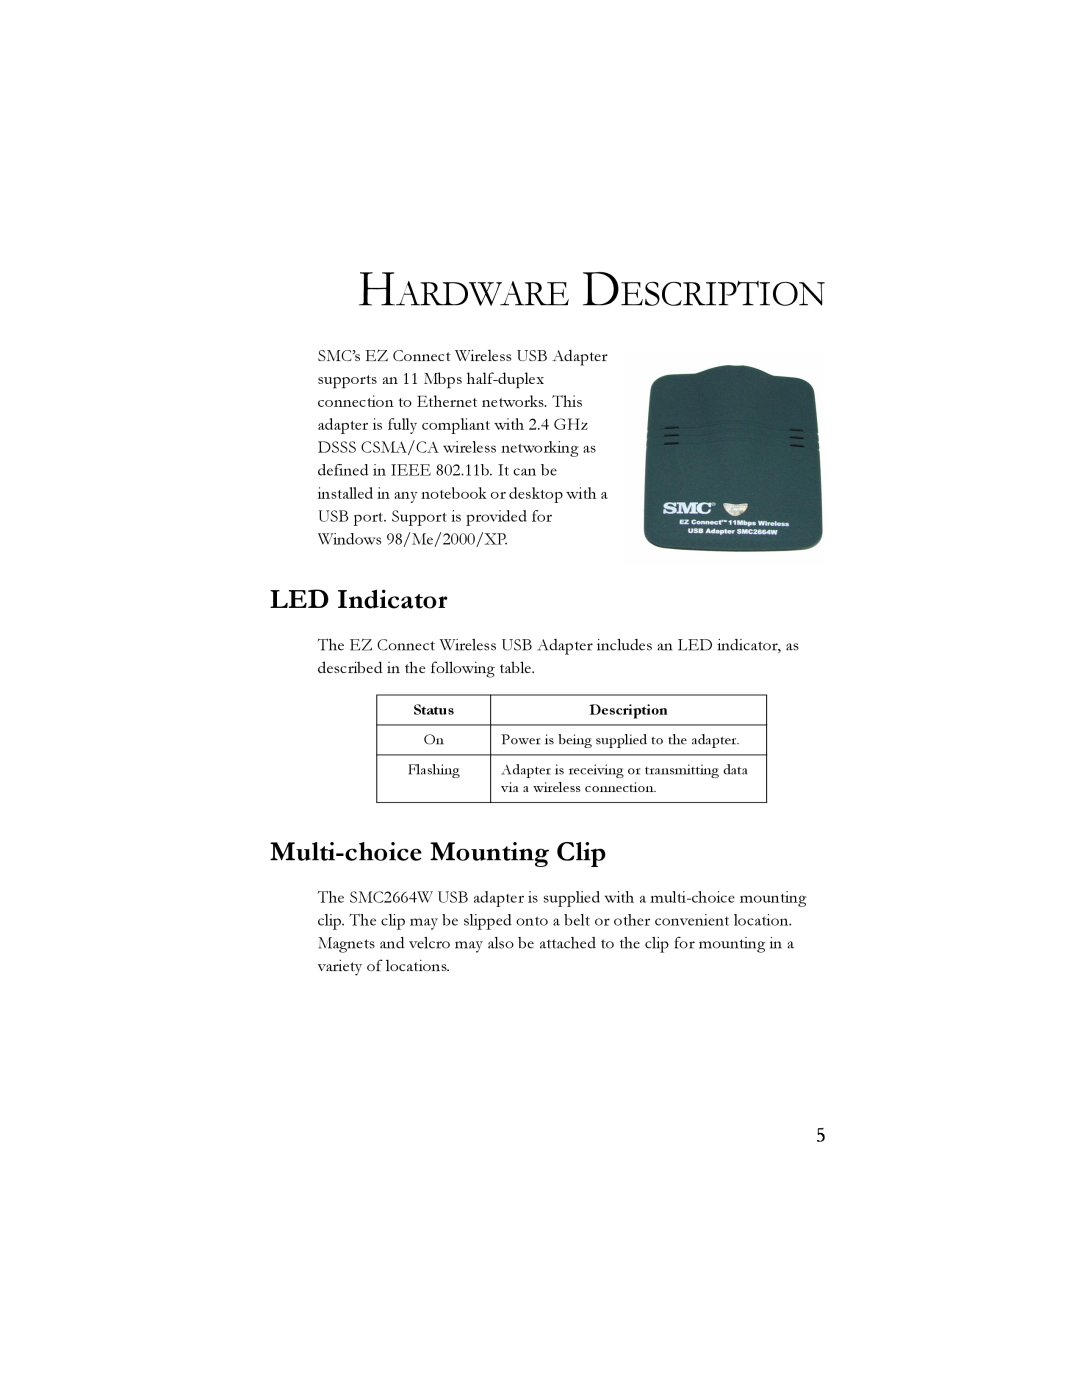 SMC Networks SMC2664W manual Hardware Description, LED Indicator, Multi-choice Mounting Clip 